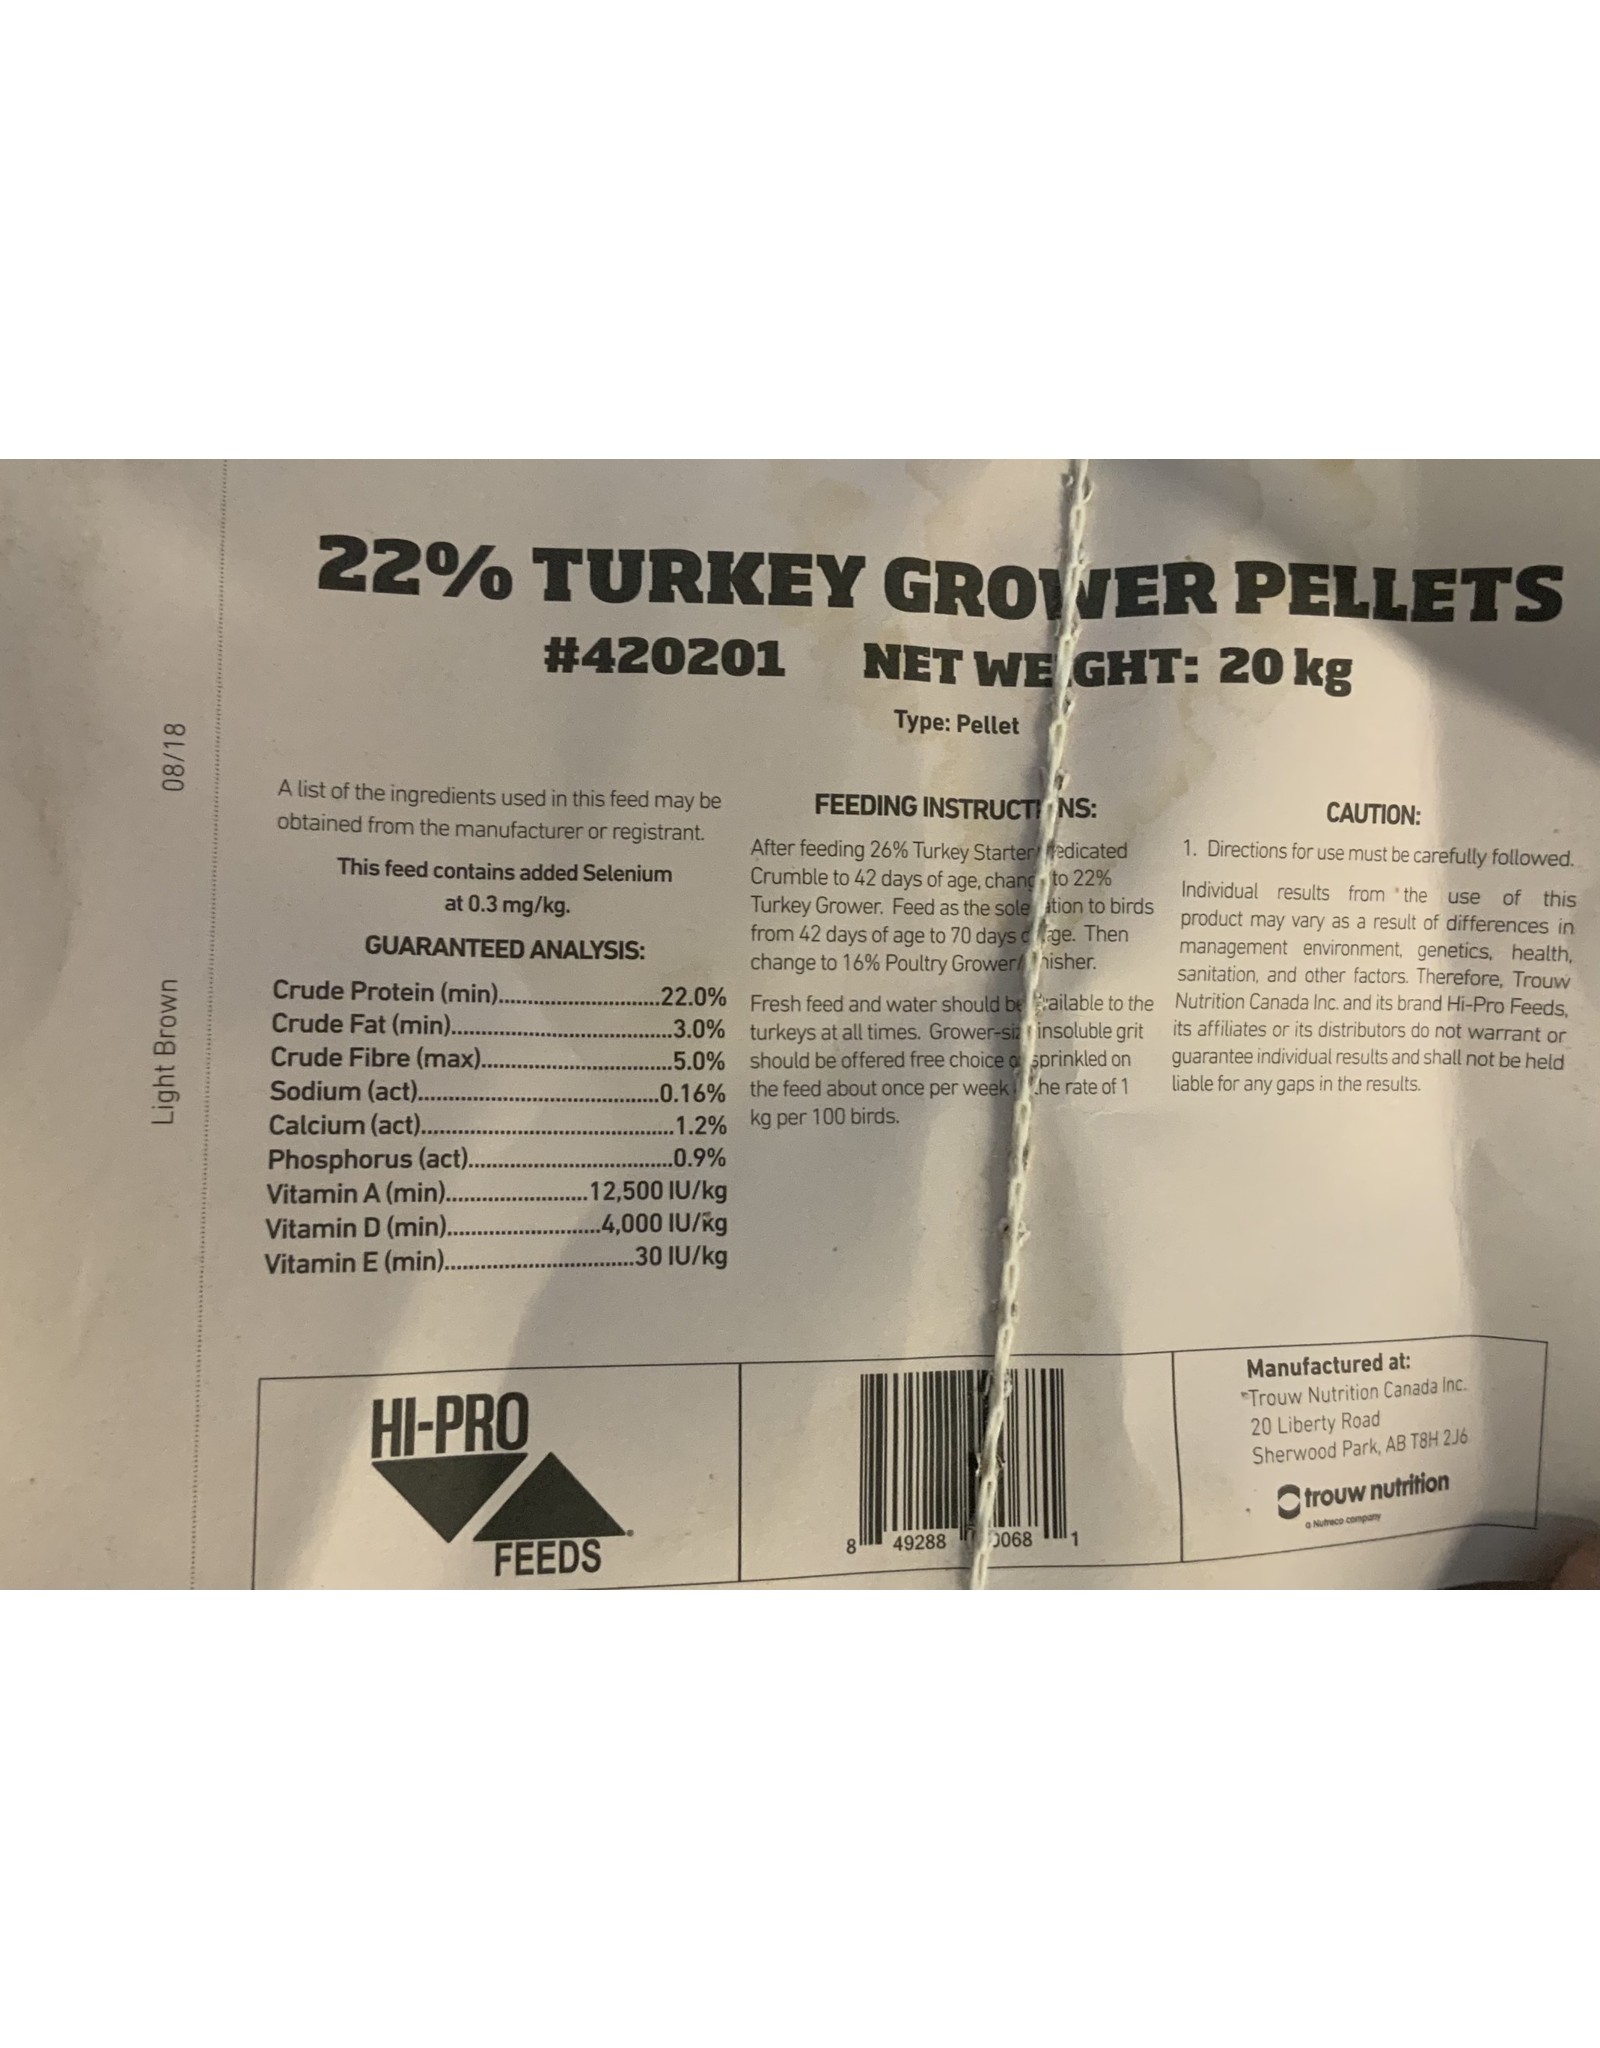 TURKEY - 22% TURKEY GROWER NON-MEDICATED  20 kg (C-Can) - HI-PRO - 12501605